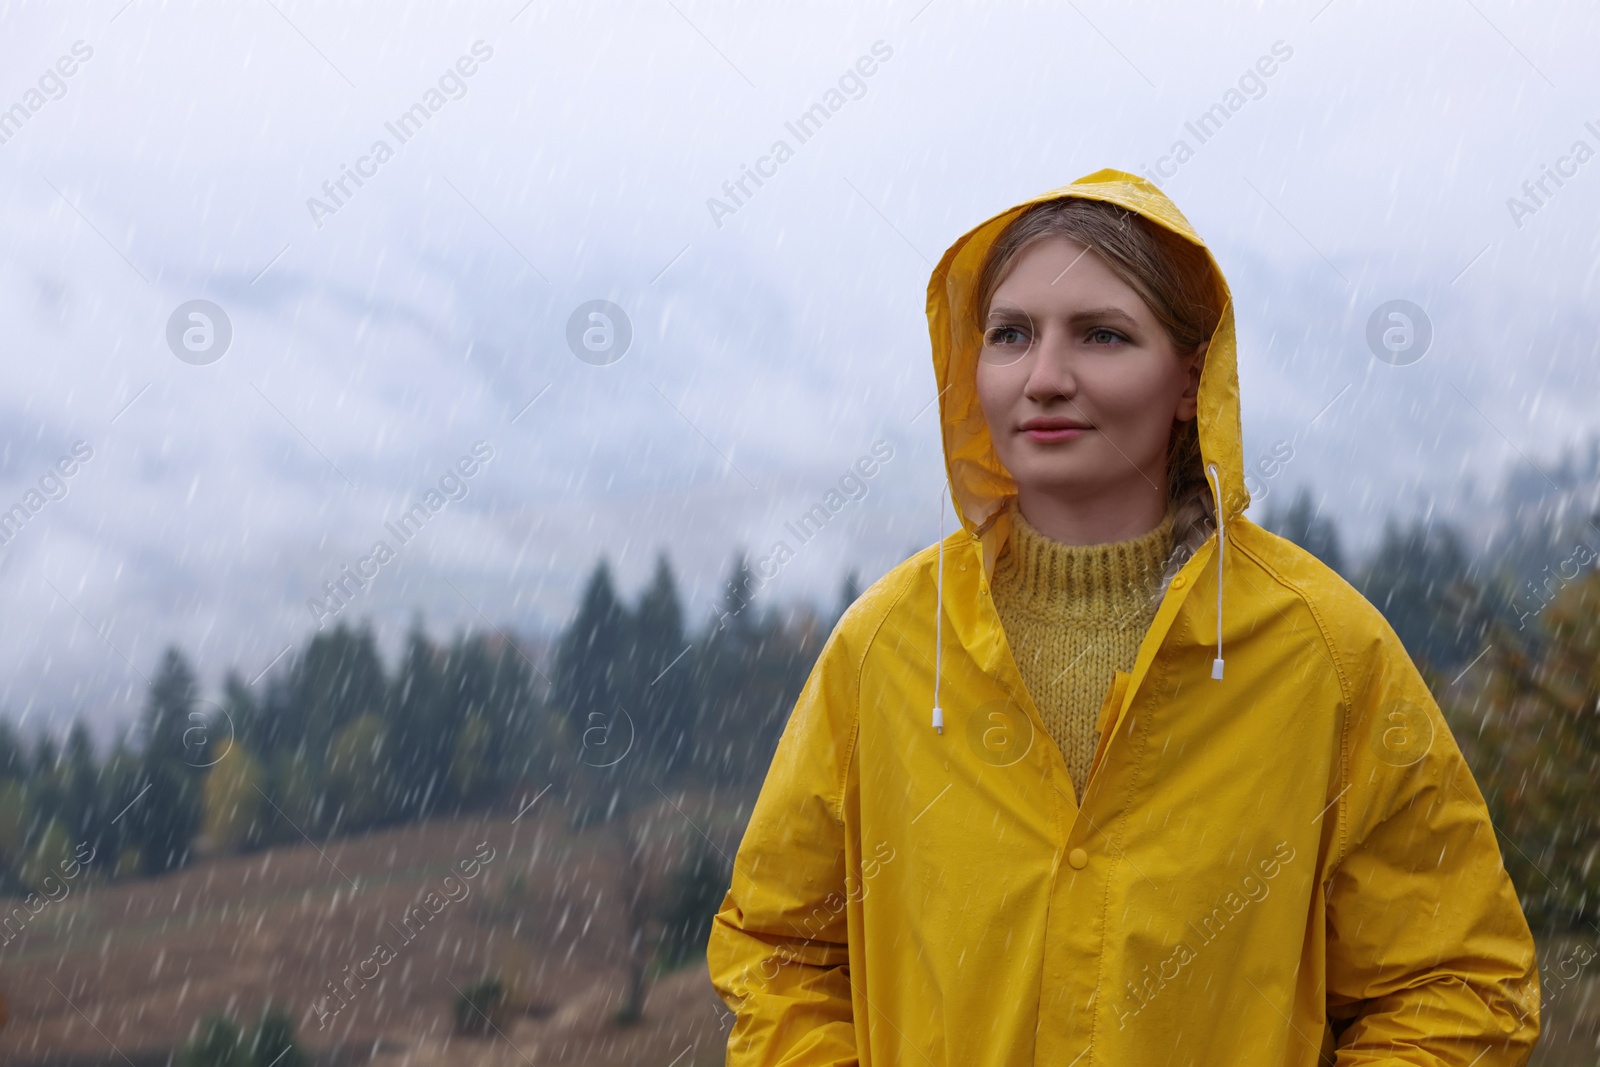 Photo of Young woman in raincoat enjoying mountain landscape under rain